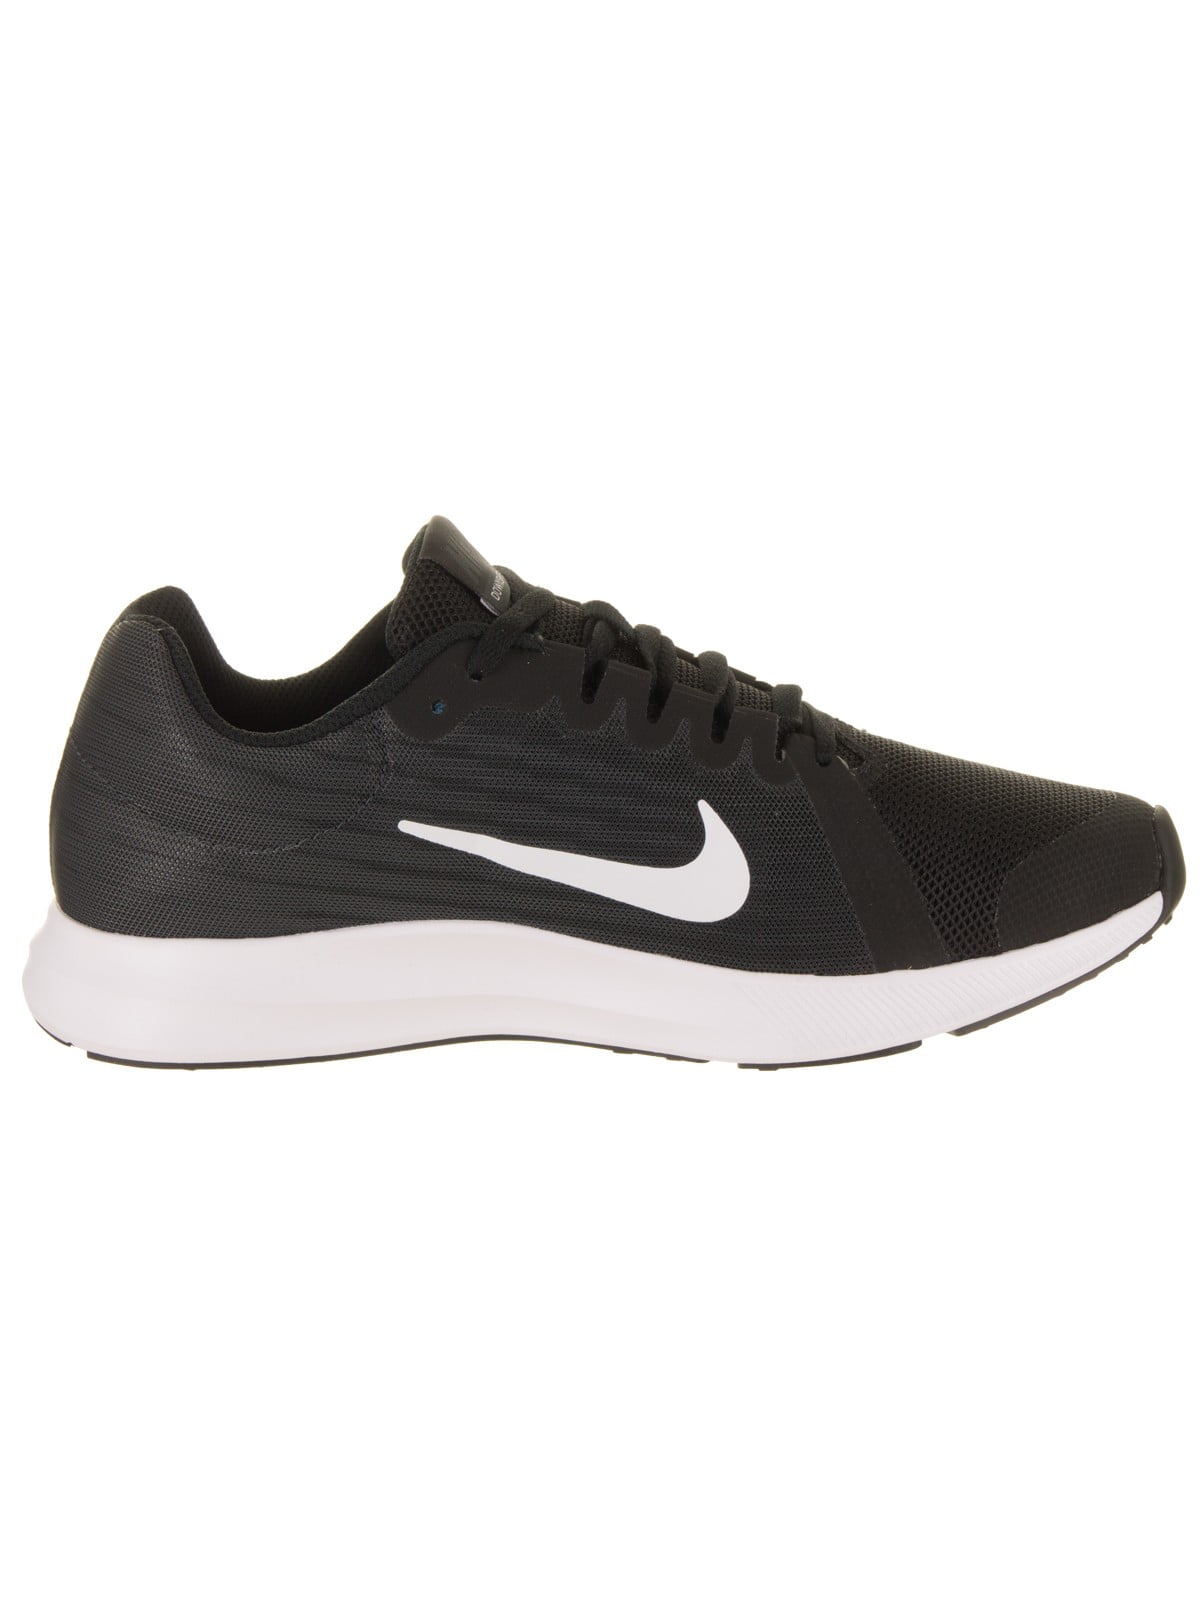 Nike - Nike 922853-001: Black White 